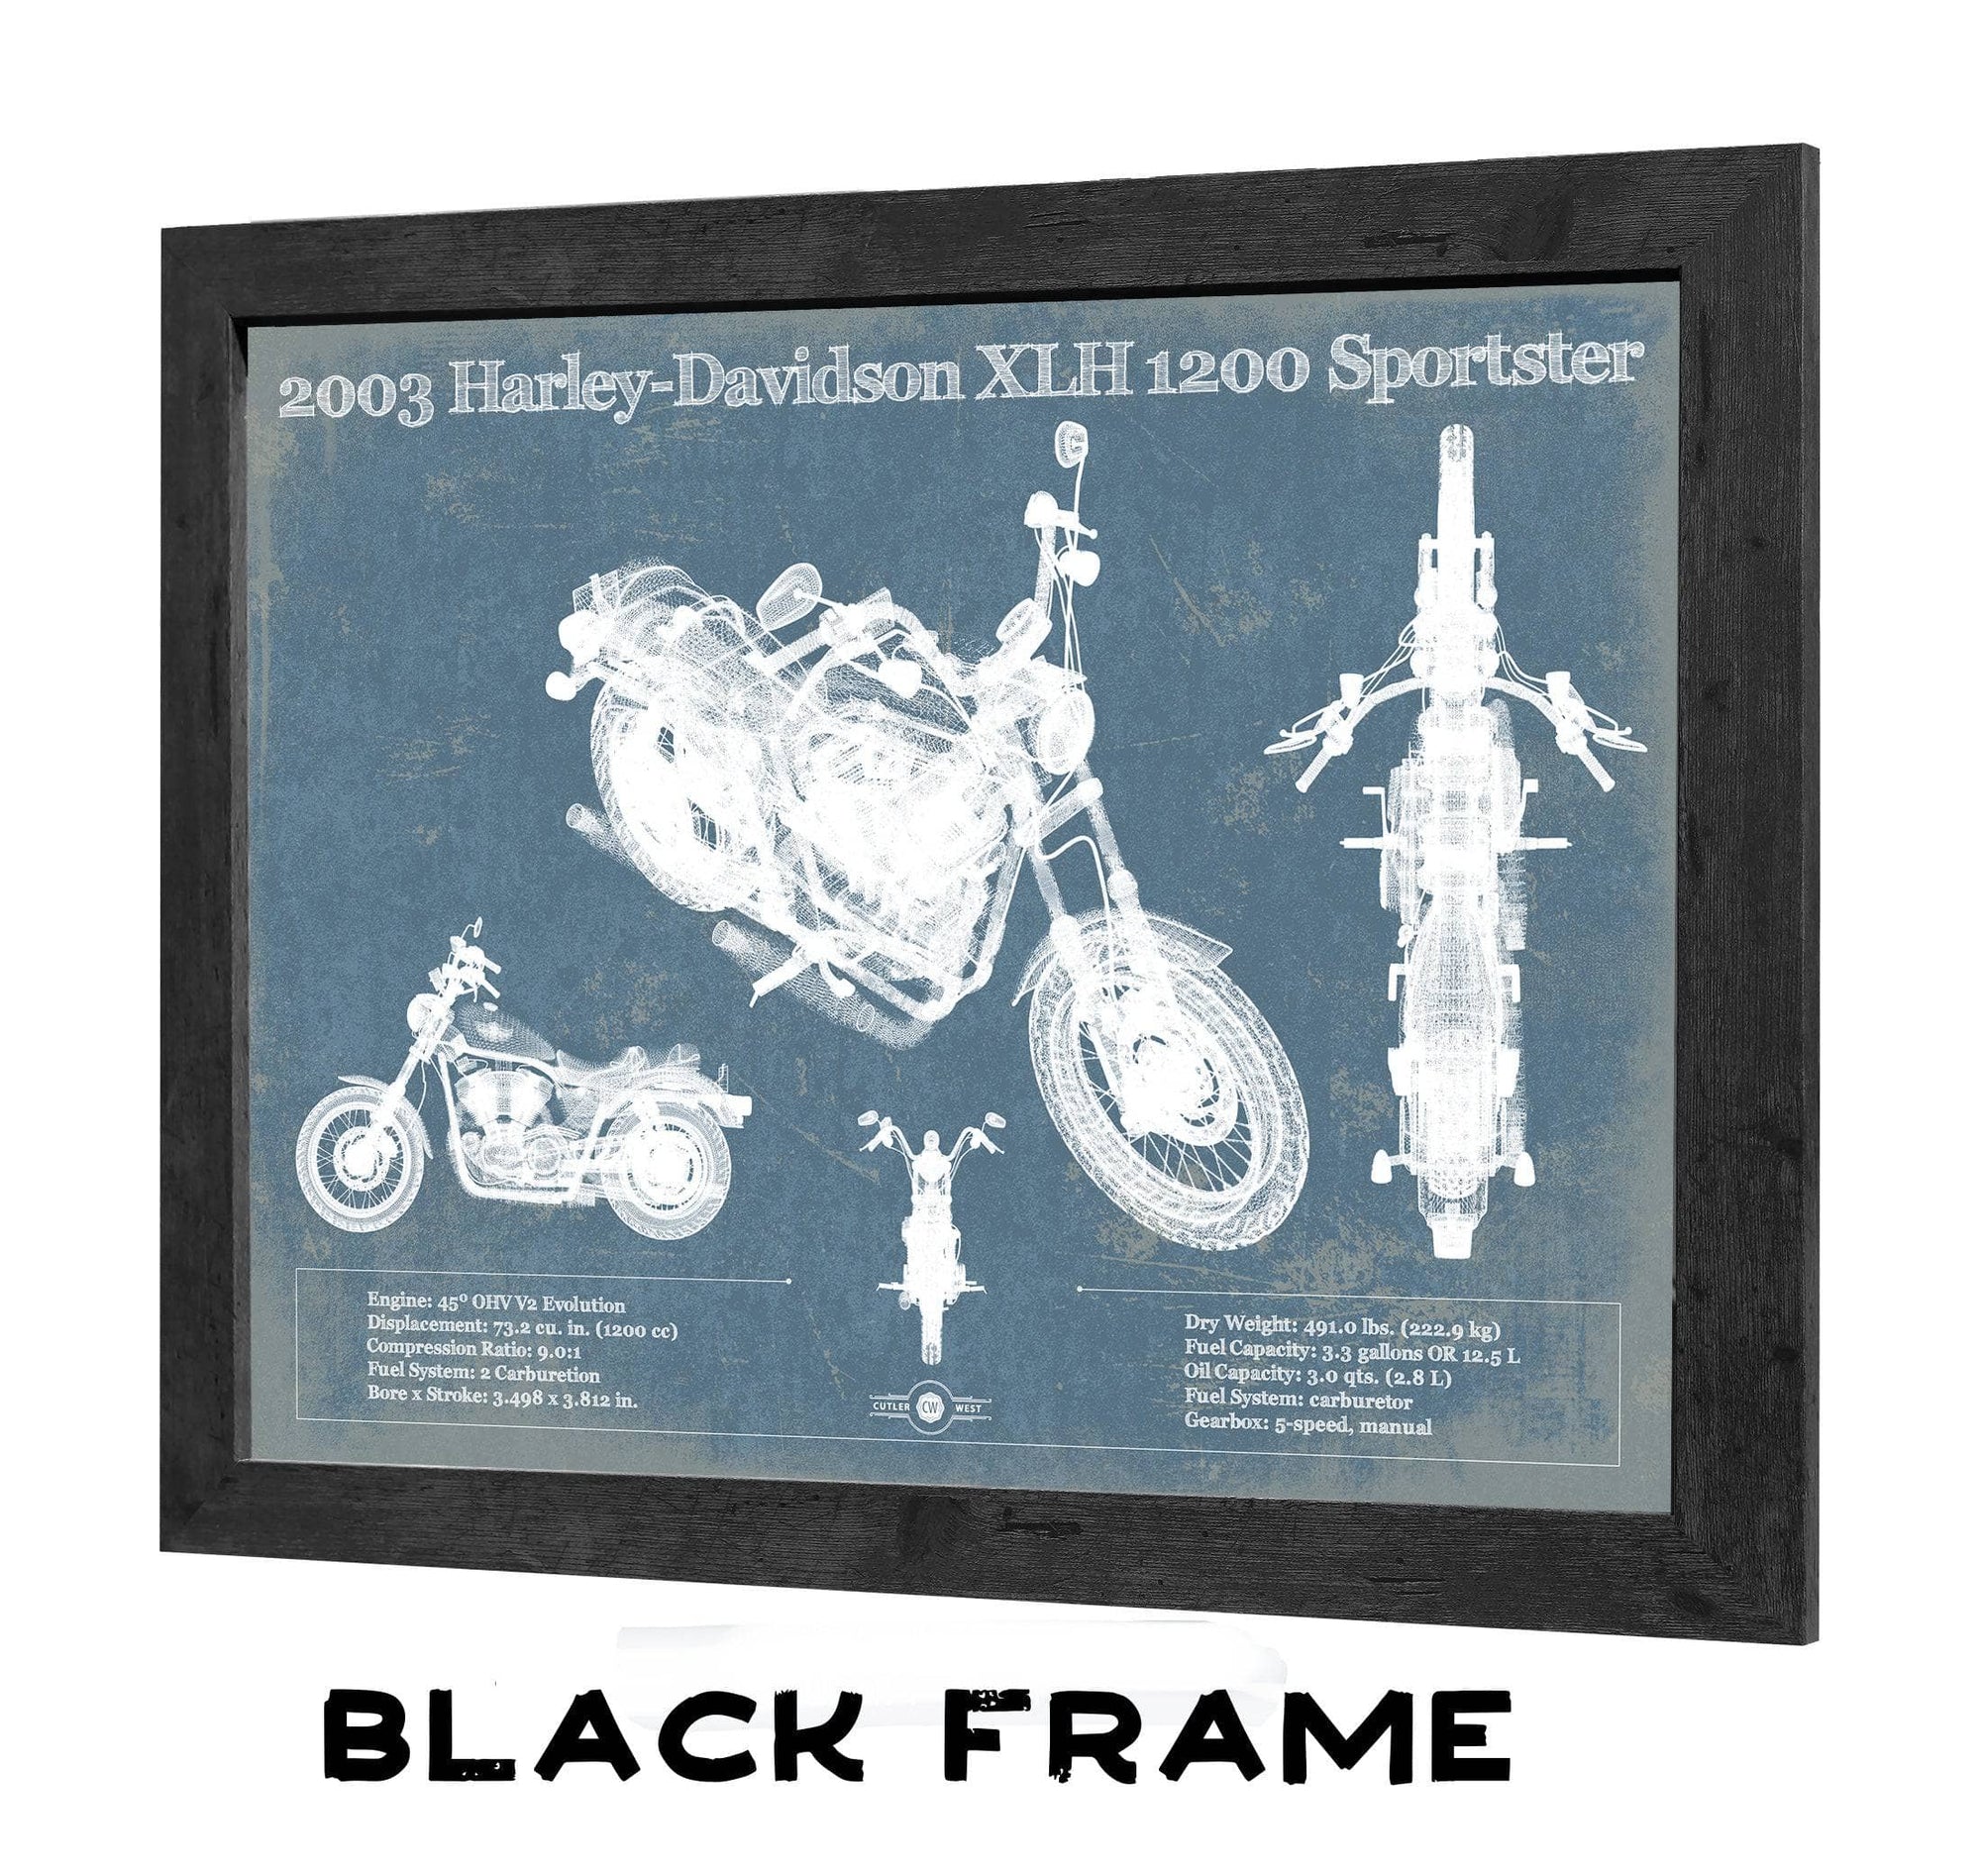 2003 Harley-Davidson XLH 1200 Sportster Blueprint Motorcycle Patent Print